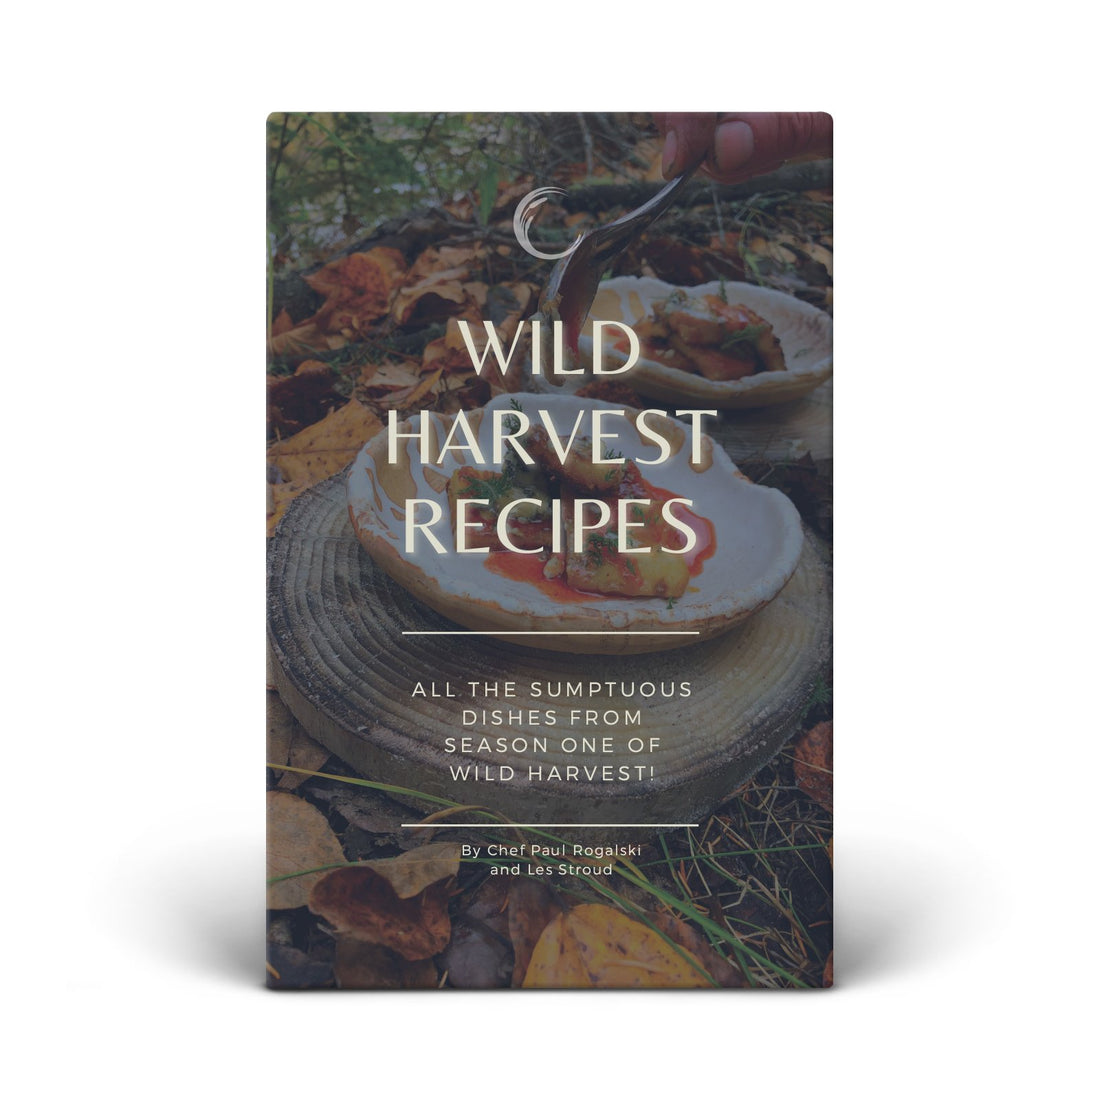 Survivorman - Wild Harvest - Cookbook + DVD + Hat Bundle